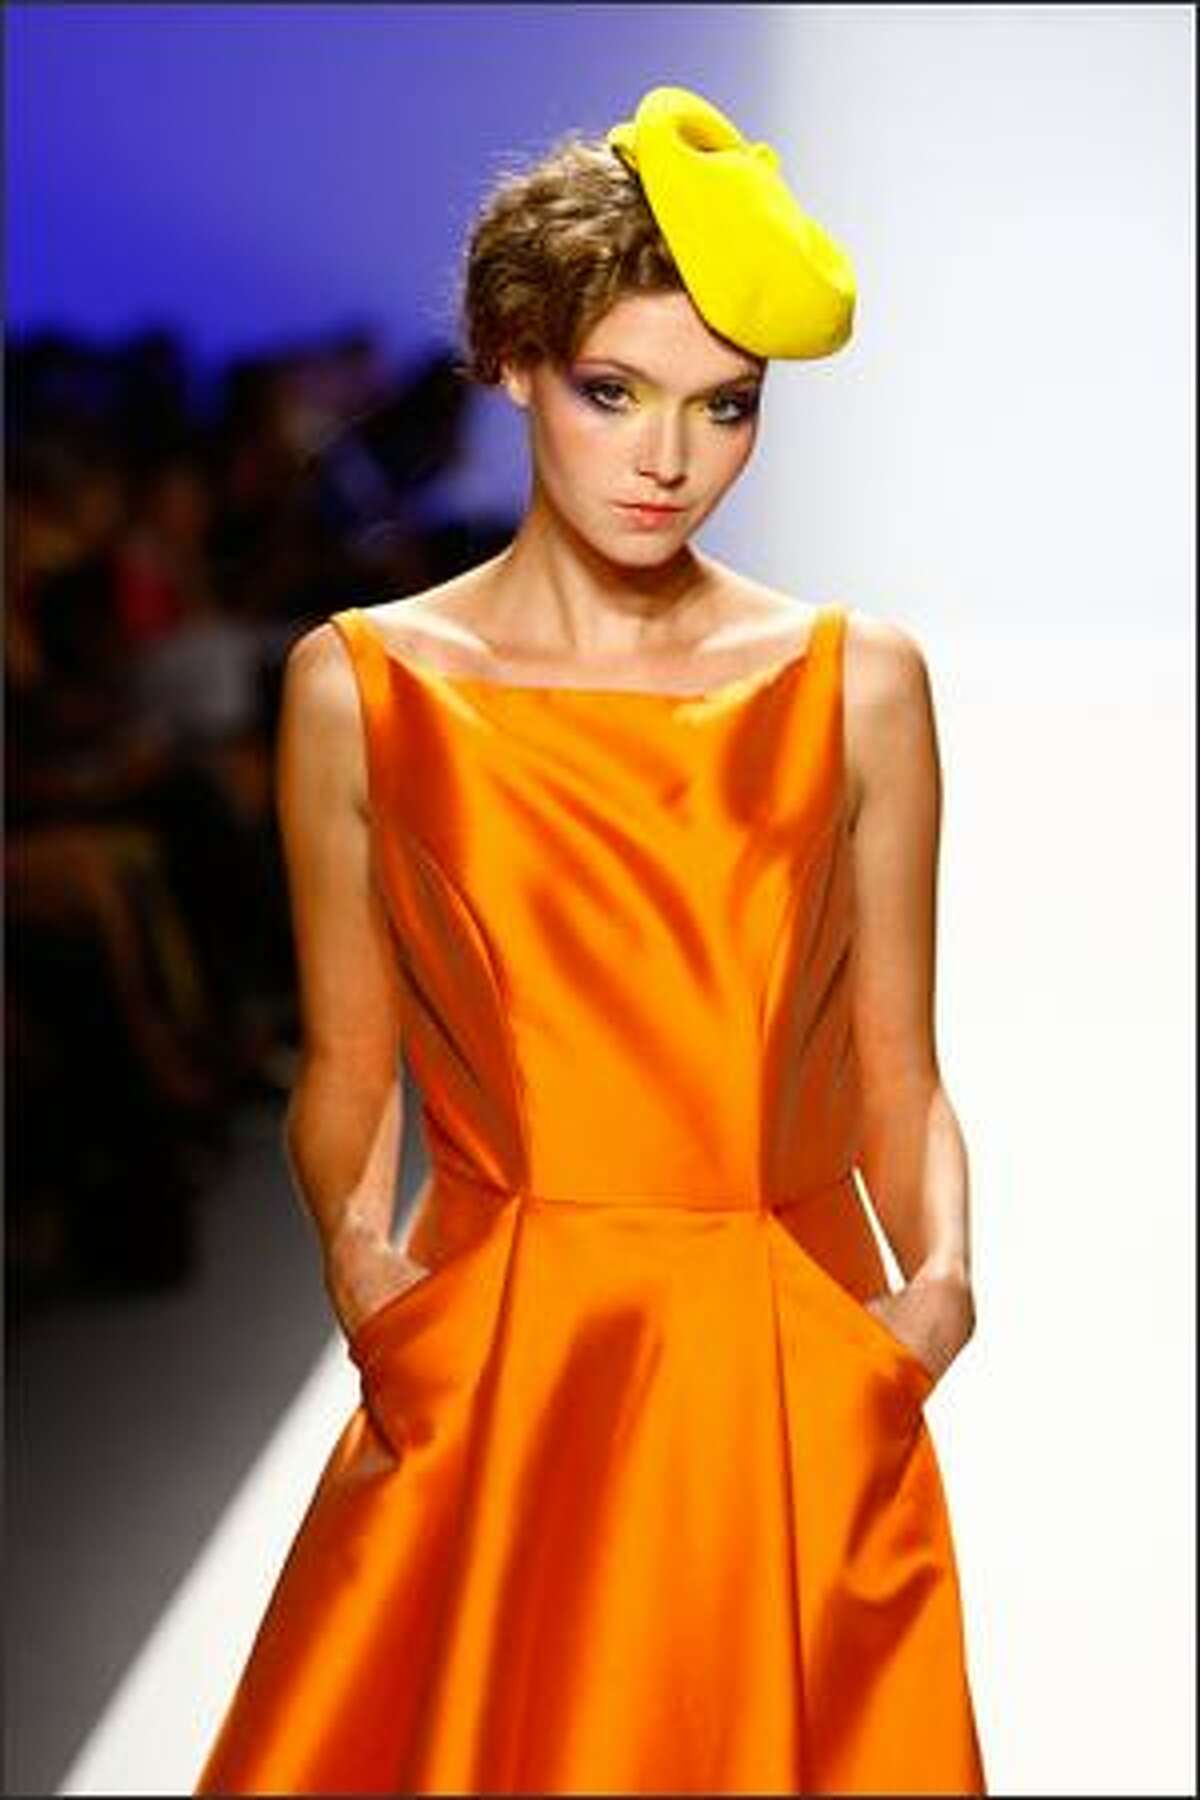 A model walks the runway at the Joanna Mastroianni show.